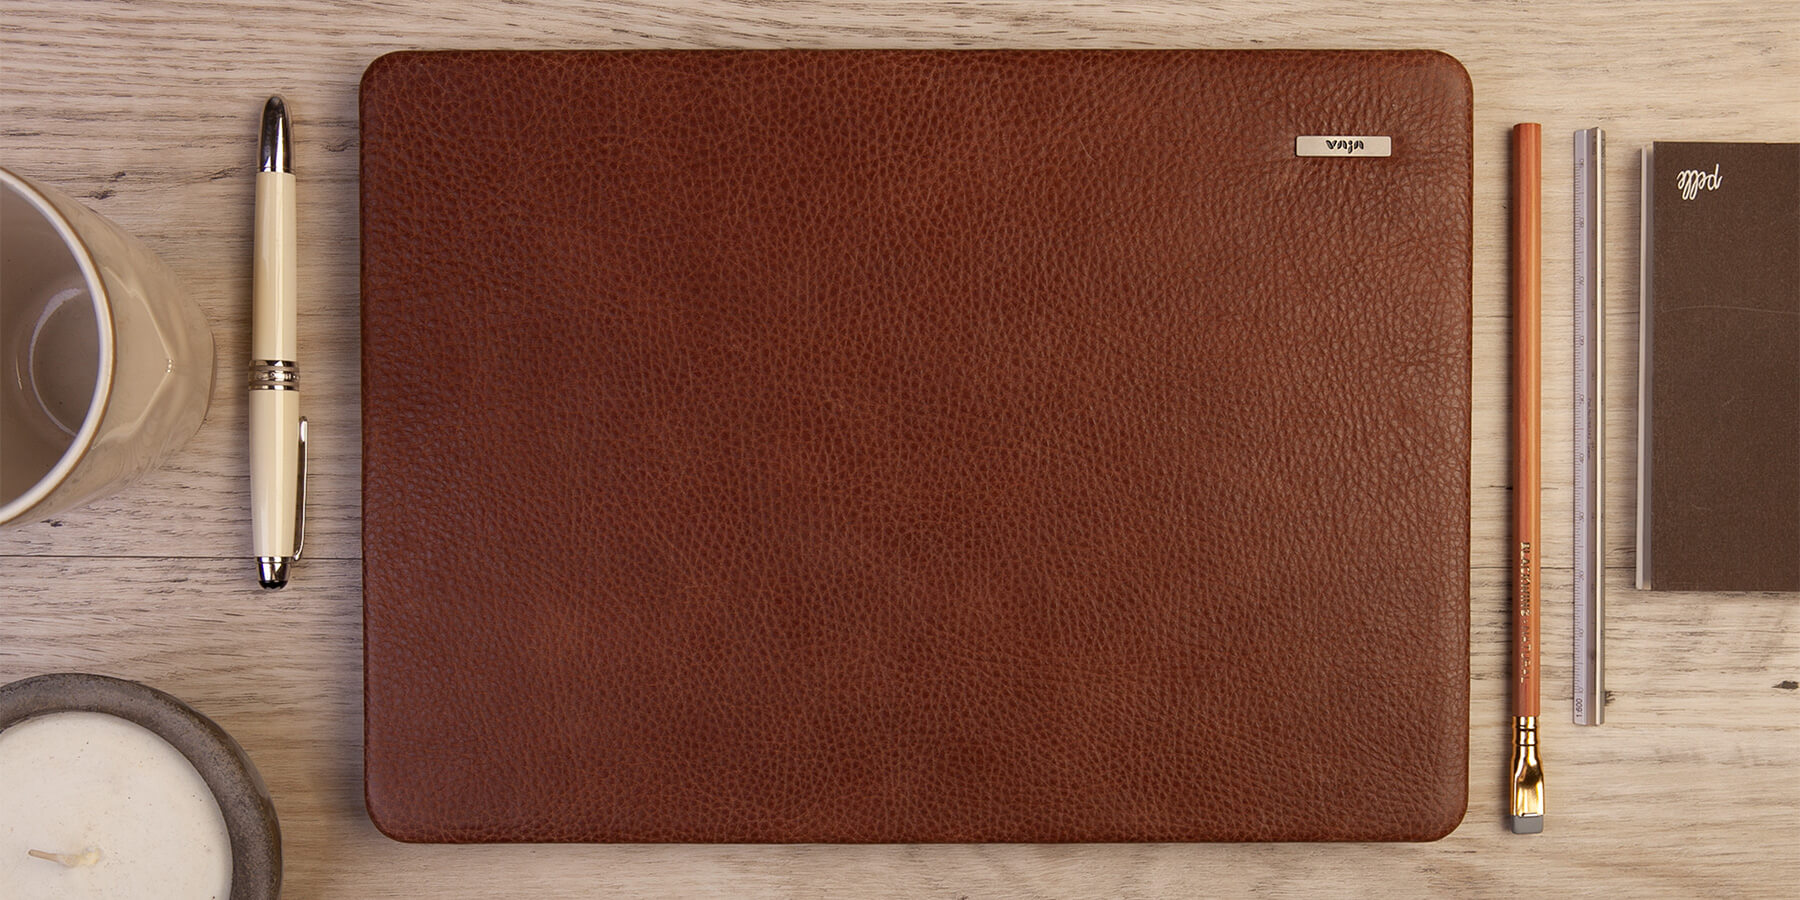 MacBook Leather Cases